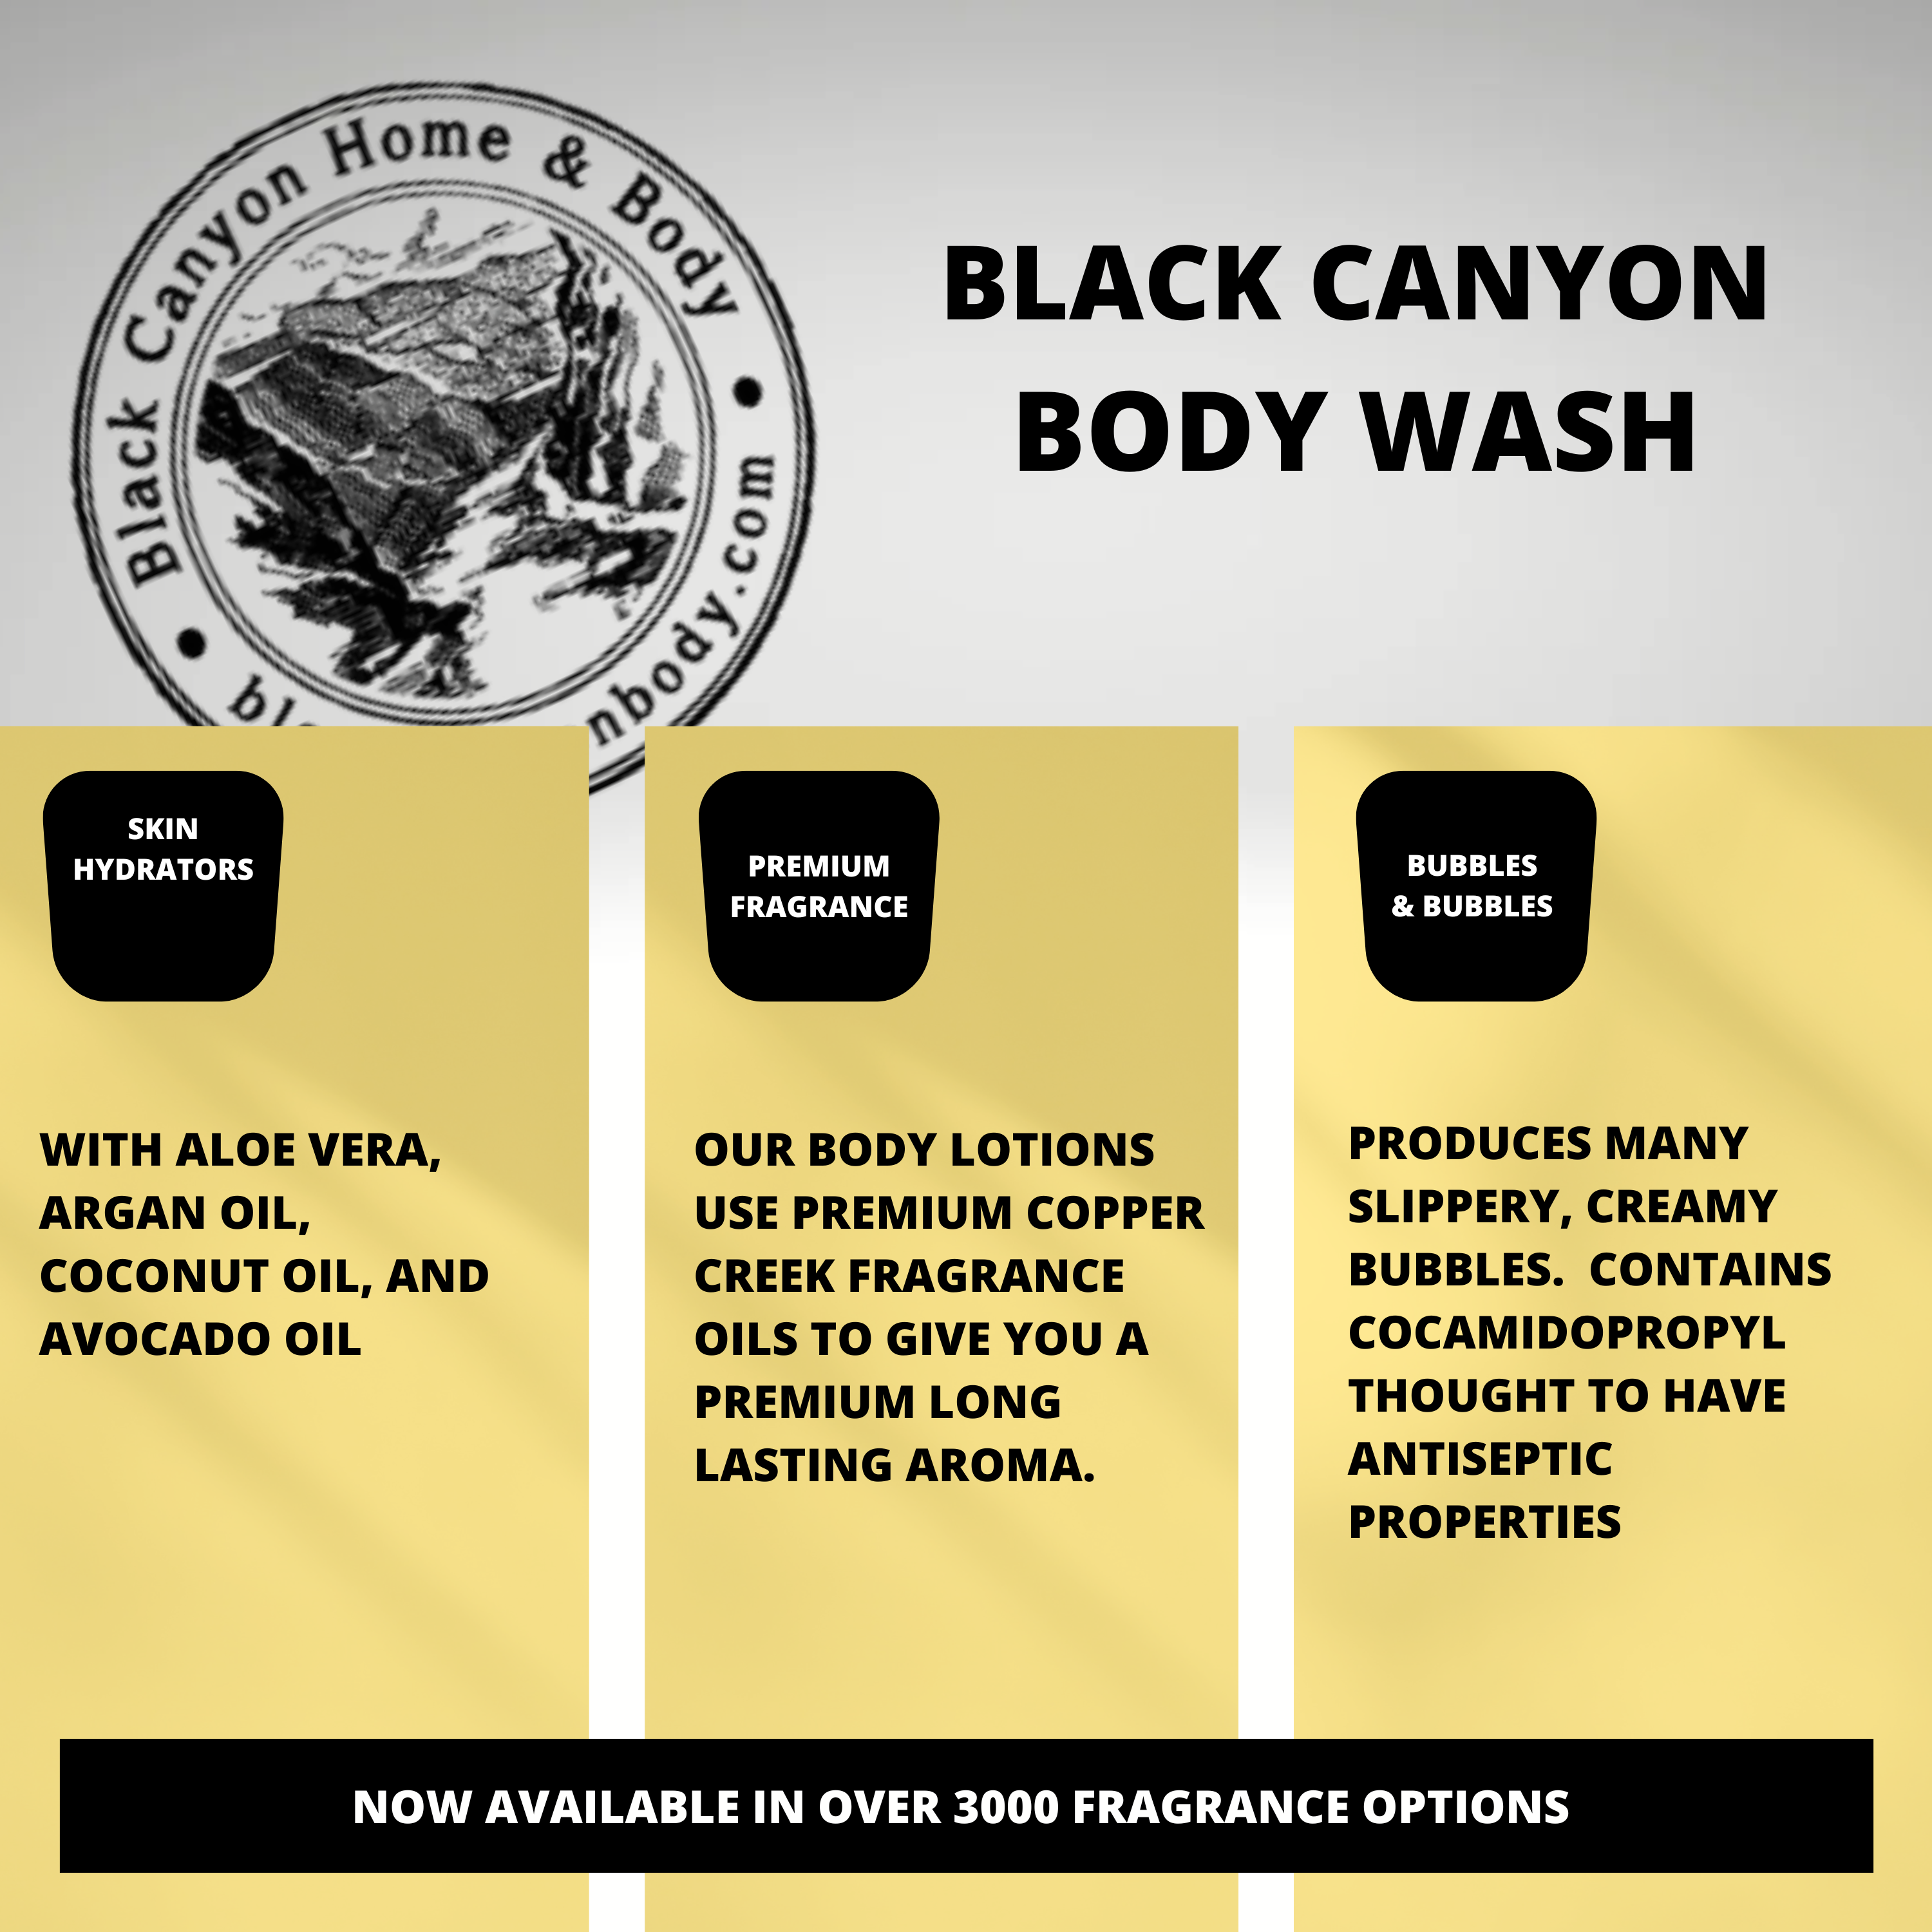 Black Canyon Bartlett Pear Scented Luxury Body Wash